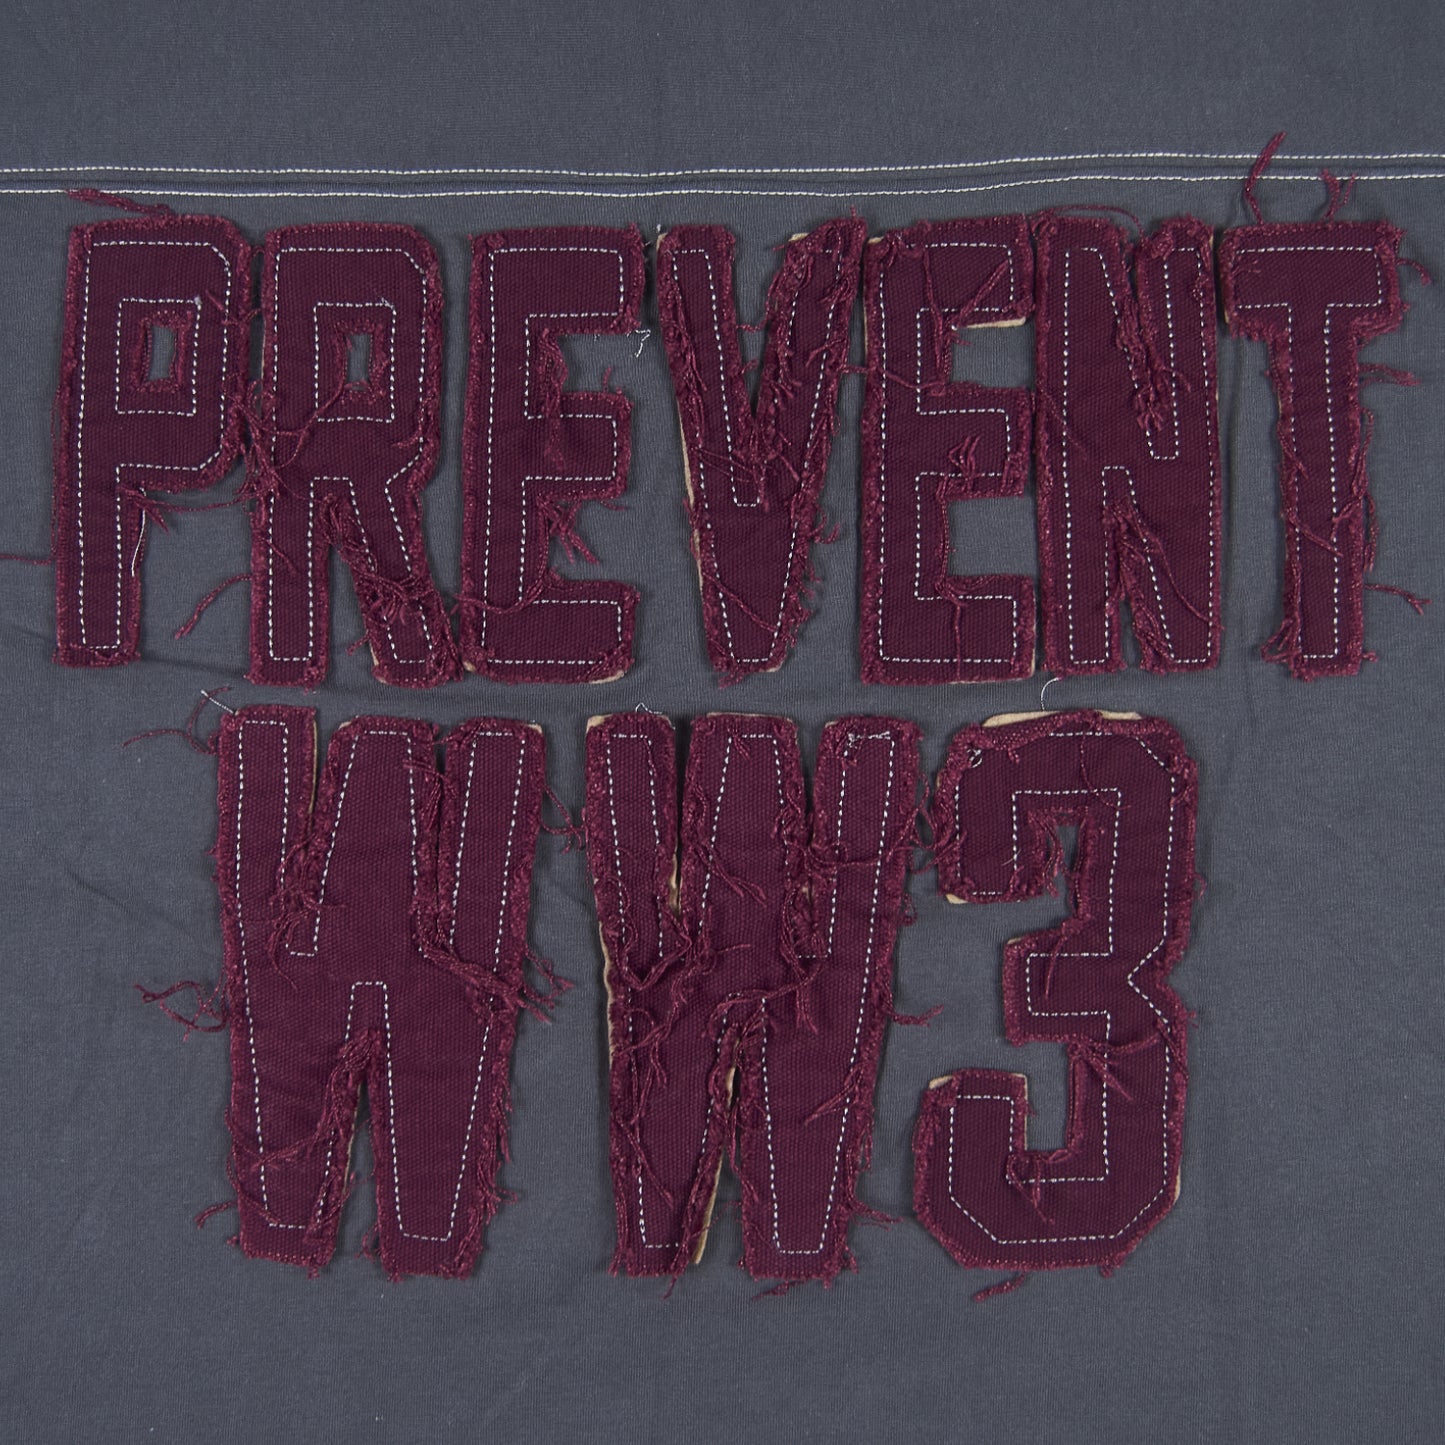 PPFM Prevent WW3 Tee – 2008